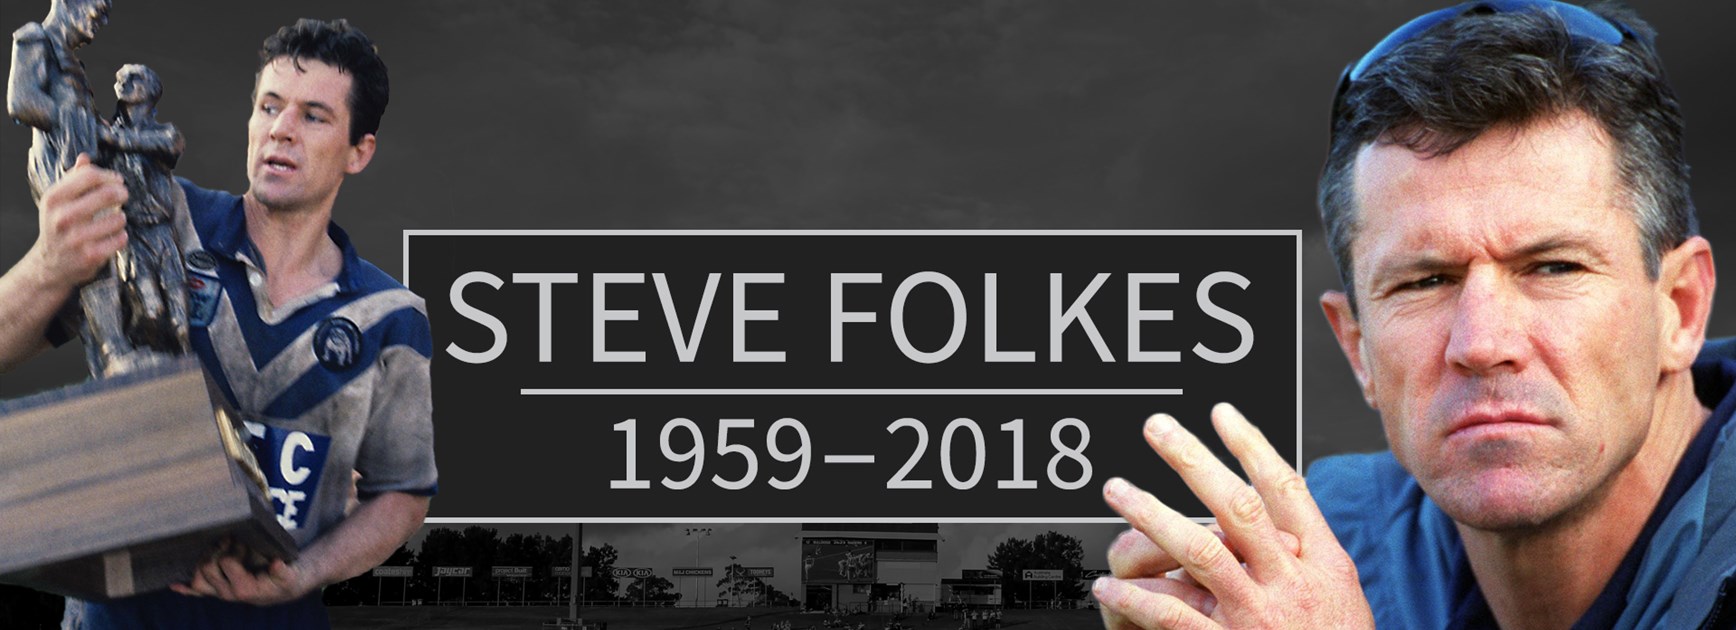 Steve Folkes memorial service